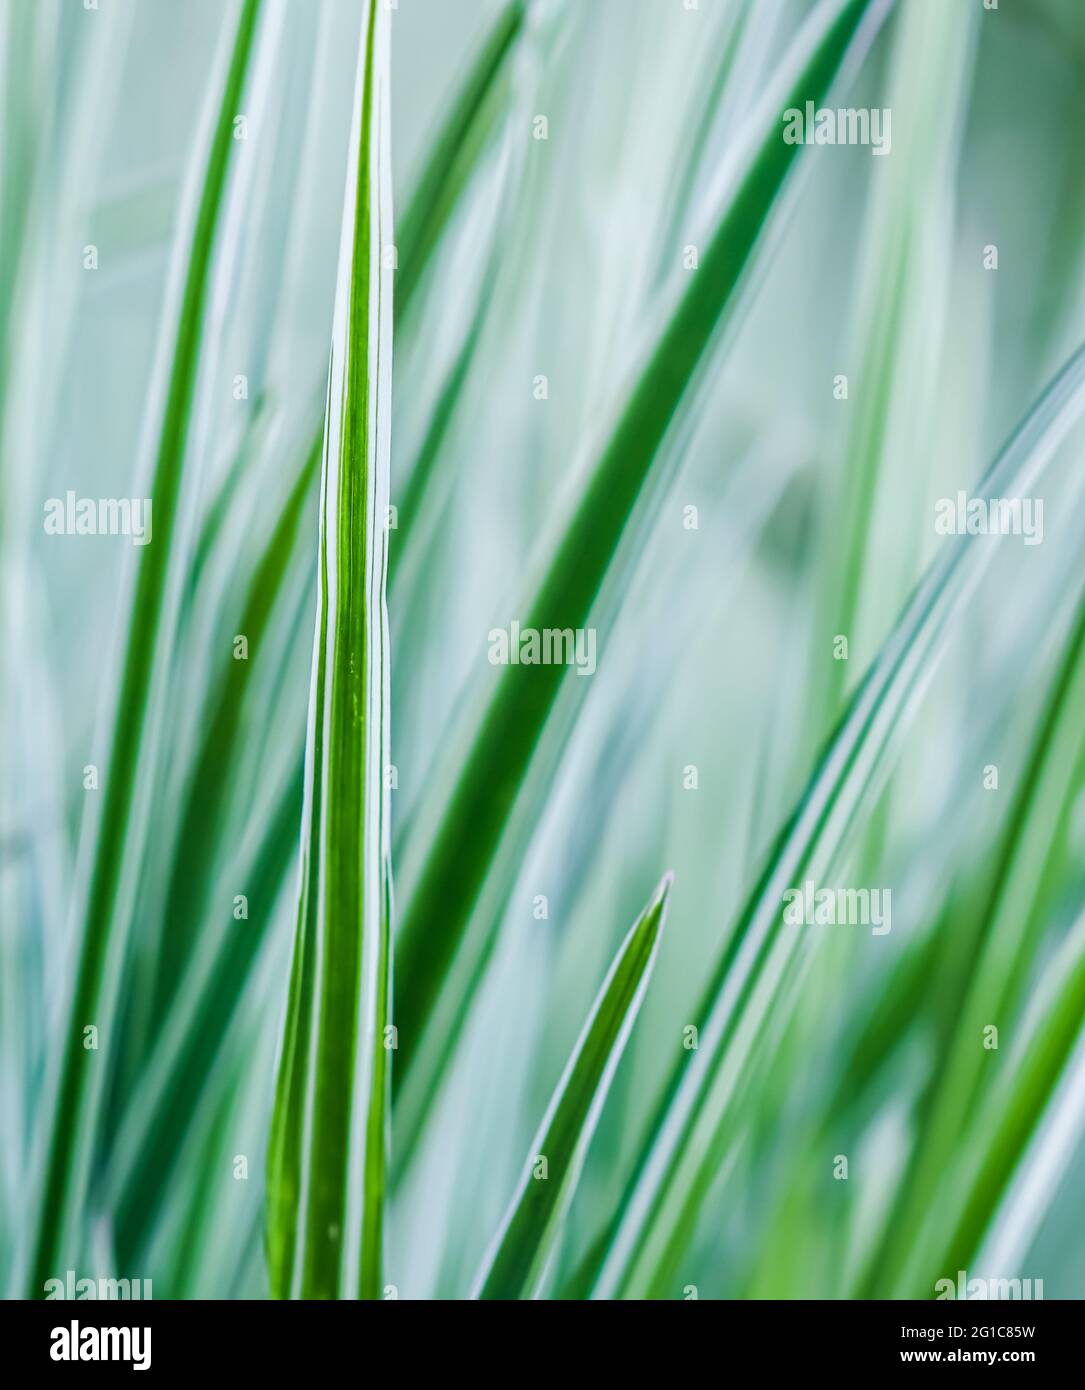 Decorative green and white striped grass. Arrhenatherum elatius bulbosum variegatum. Soft focus. Natural background. Stock Photo